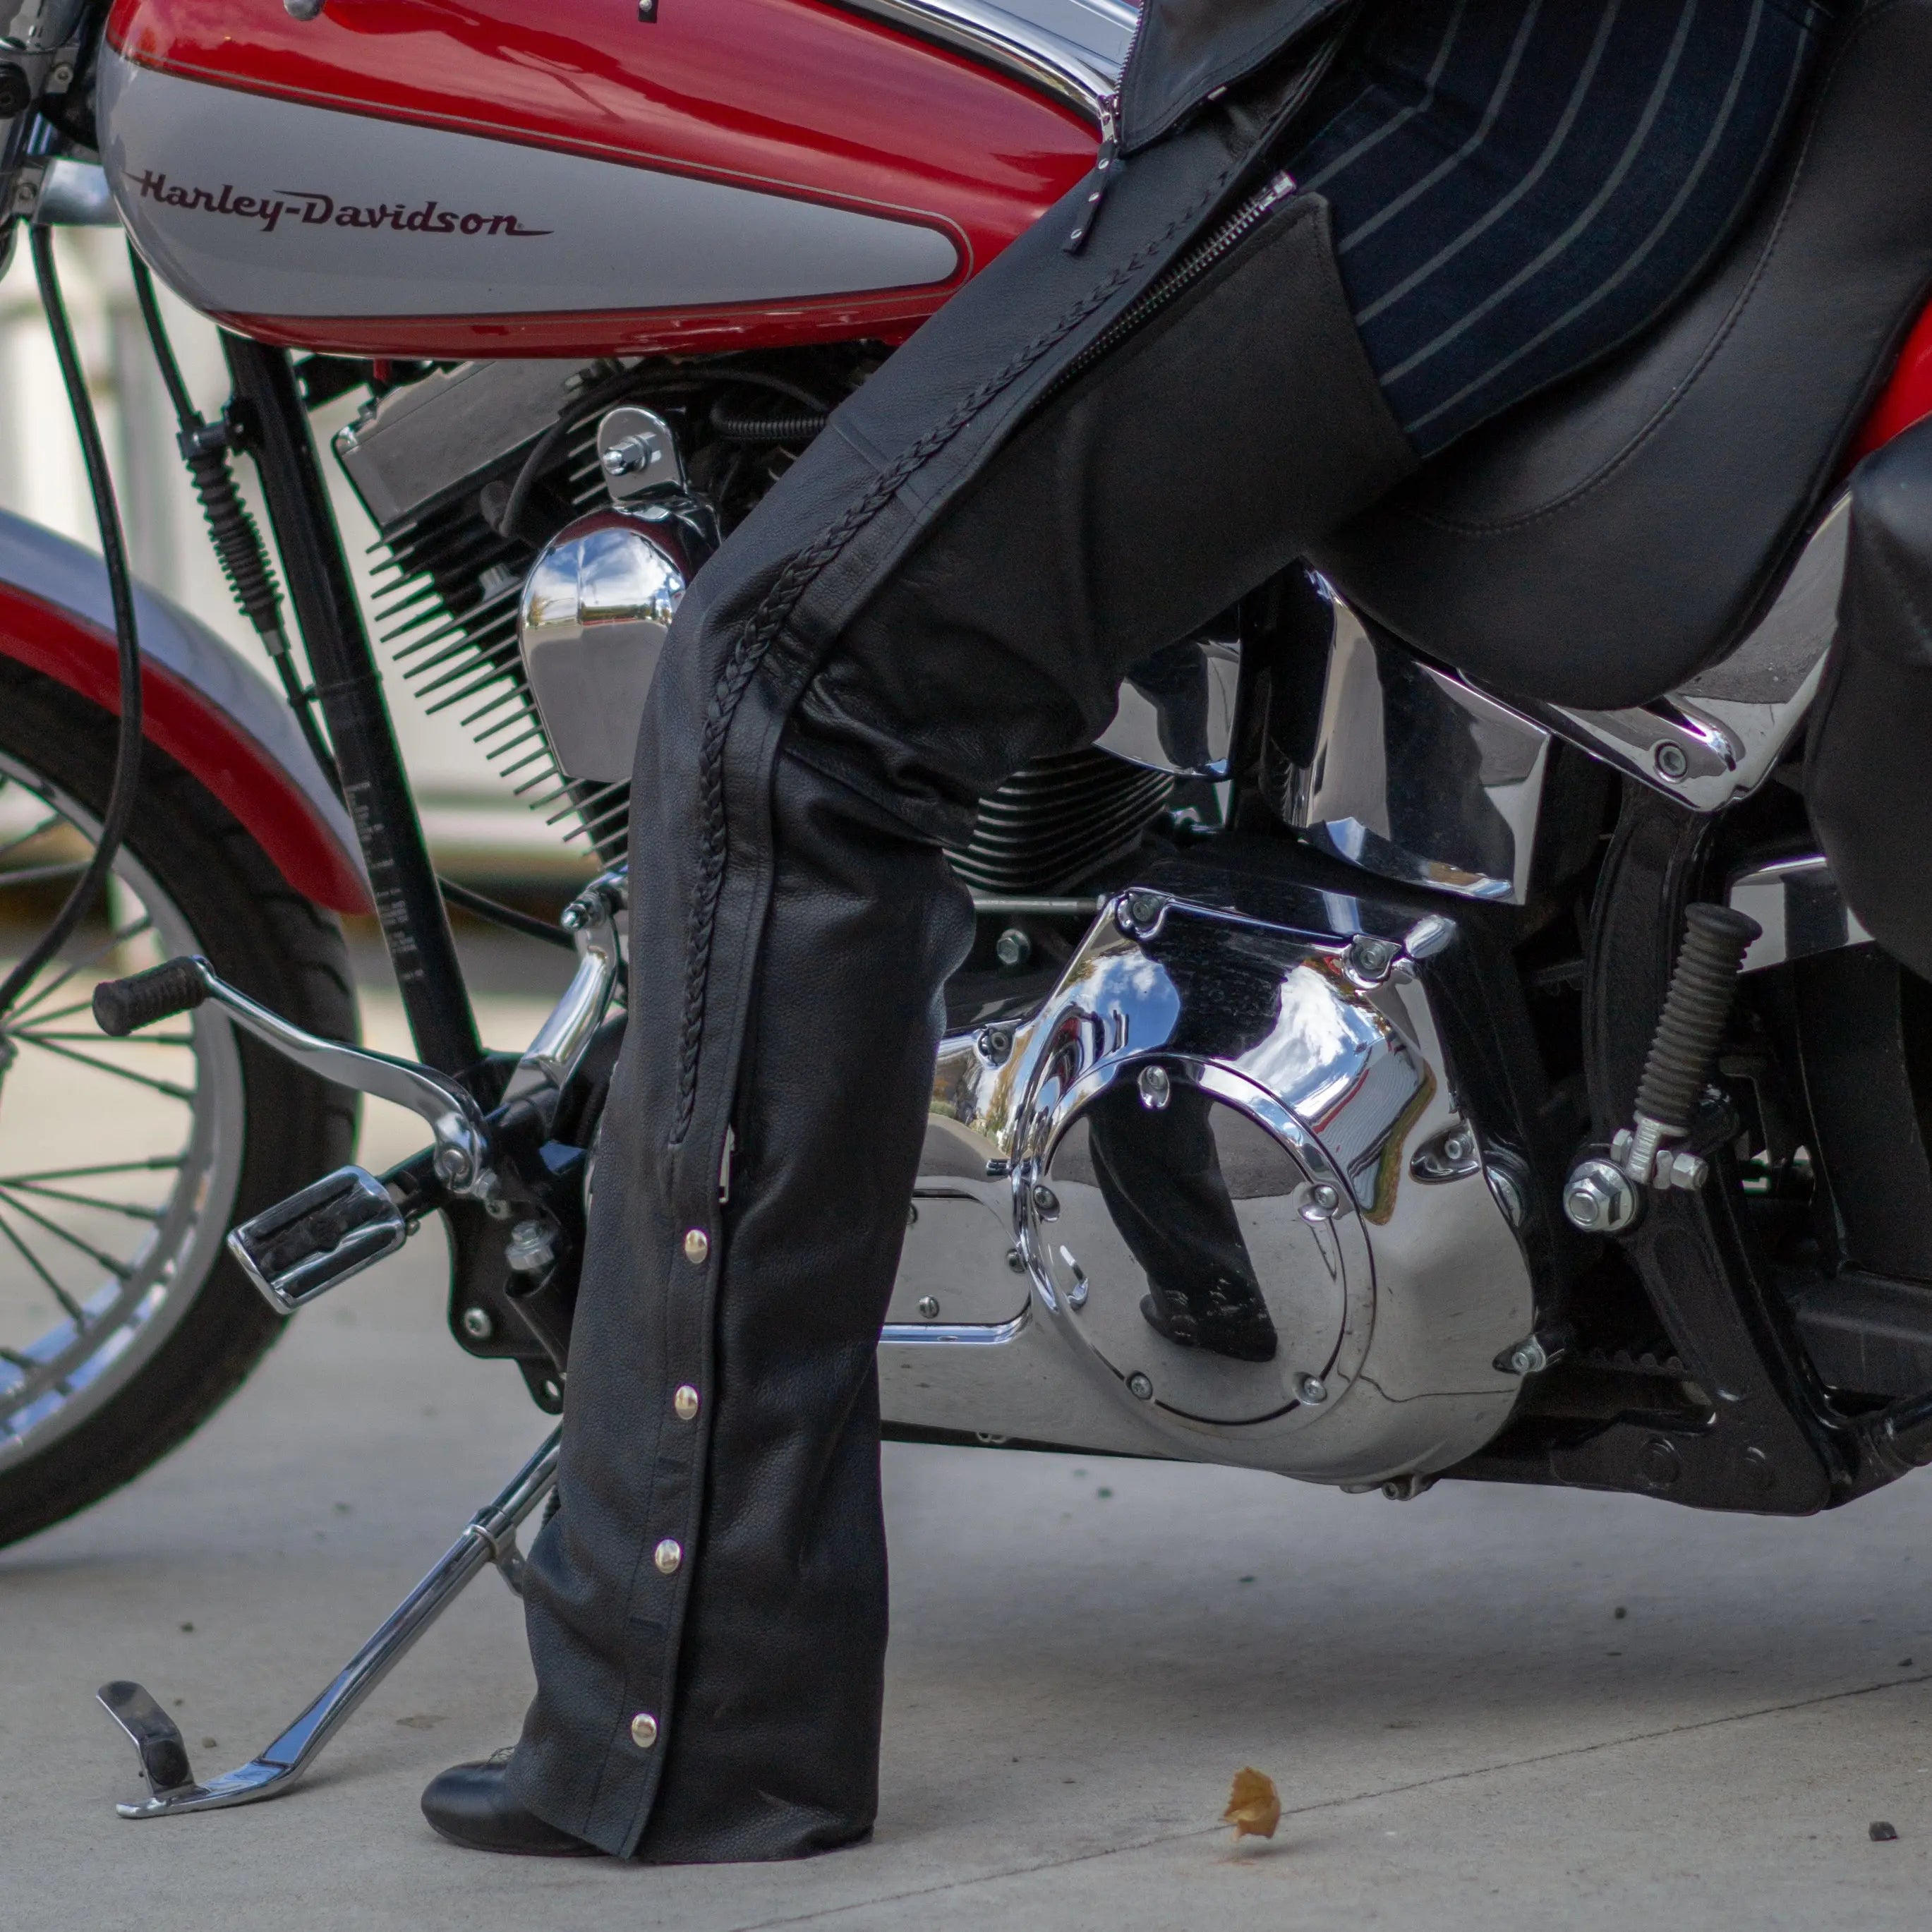 Open Road Women's Braid Detail Premium Leather Chaps Women's Motorcycle Pants & Chaps Boutique of Leathers/Open Road